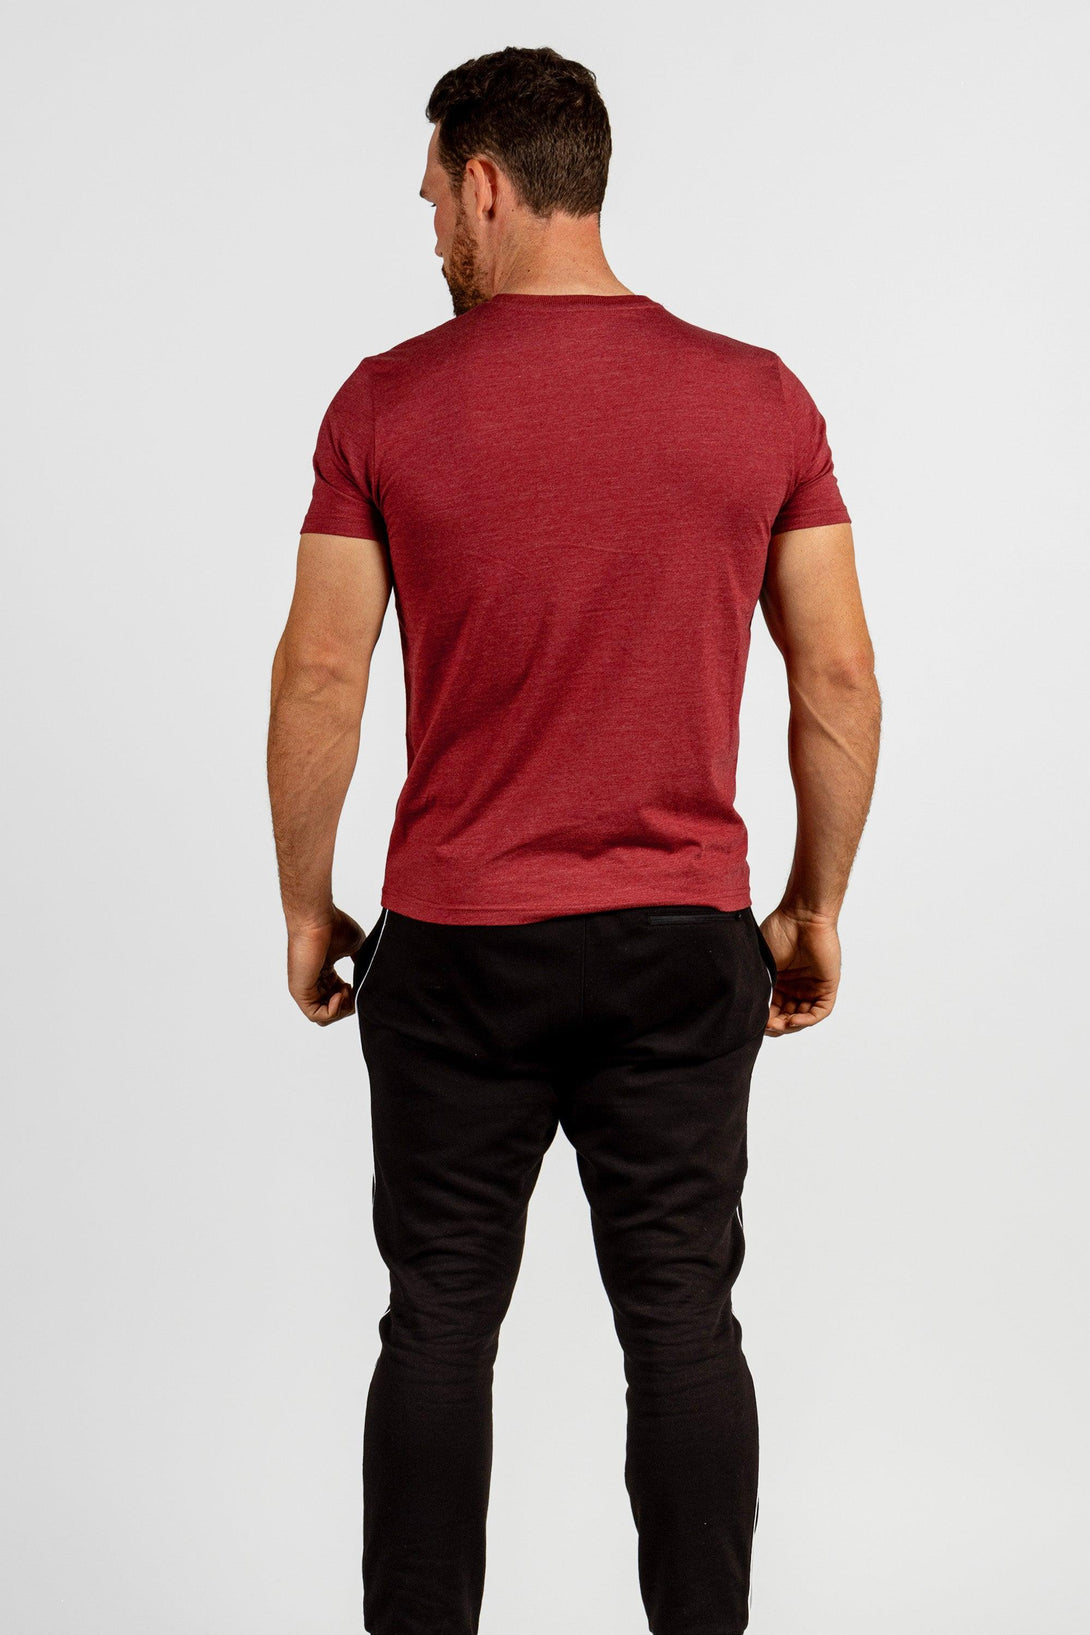 Round Neck T-Shirts | MELANGE ASSORTED - Pack of 6 - FTS